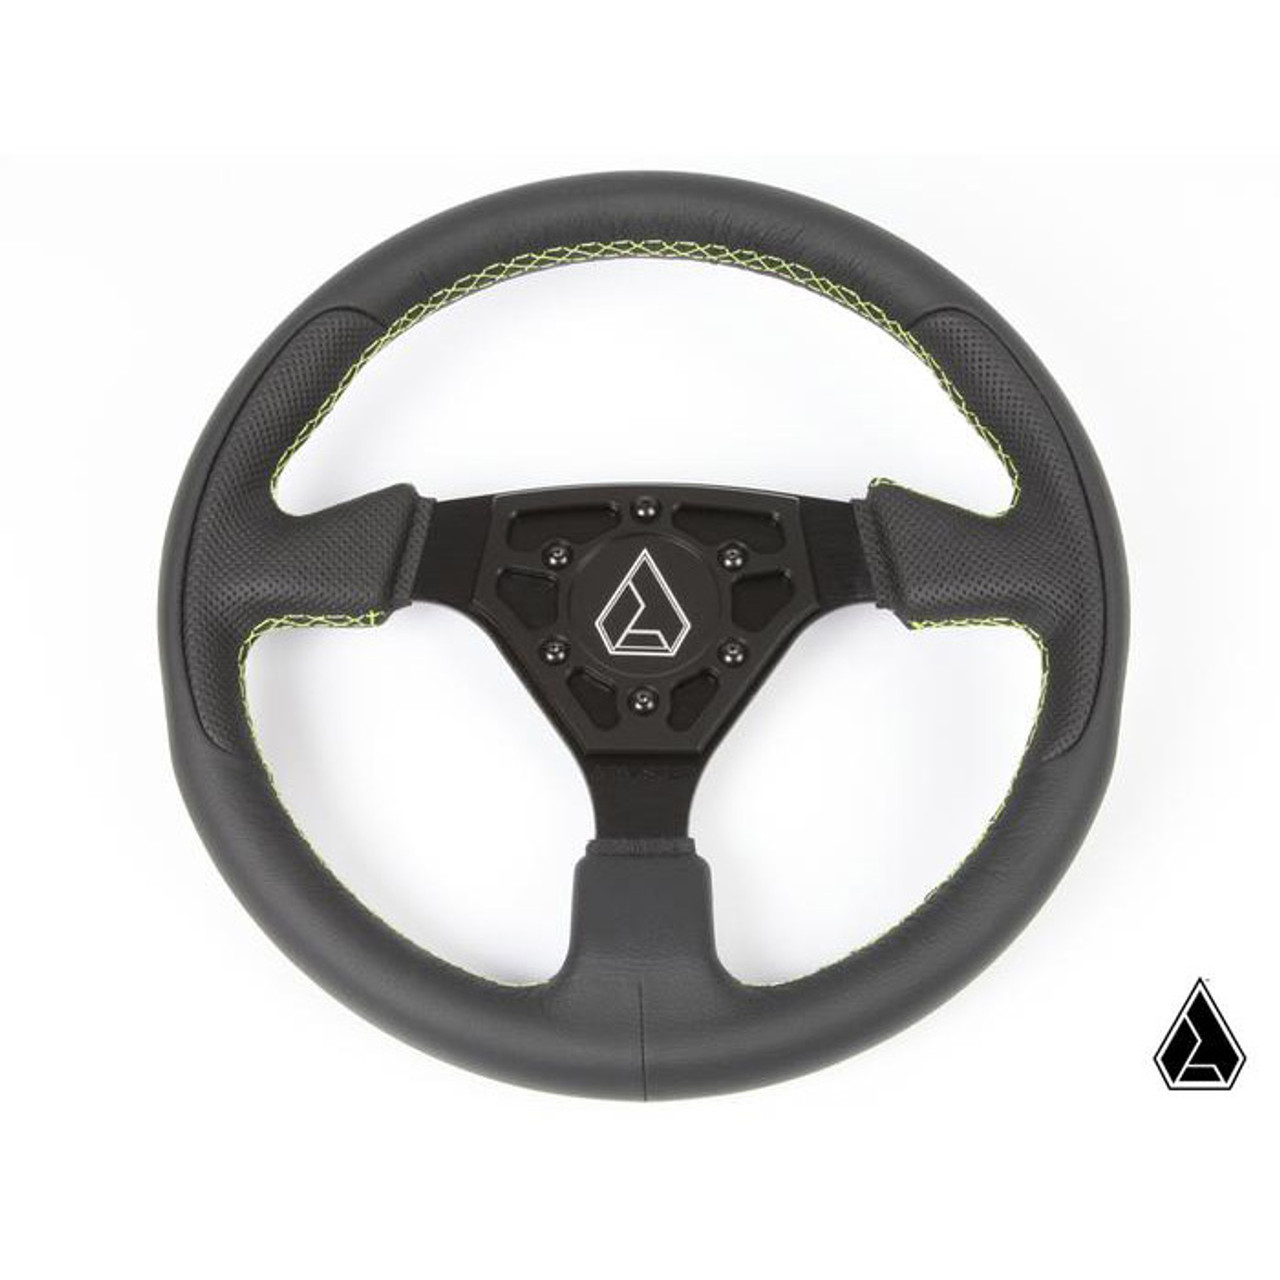 Assault Industries Tomahawk V2 Steering Wheel (Universal) additional image 6